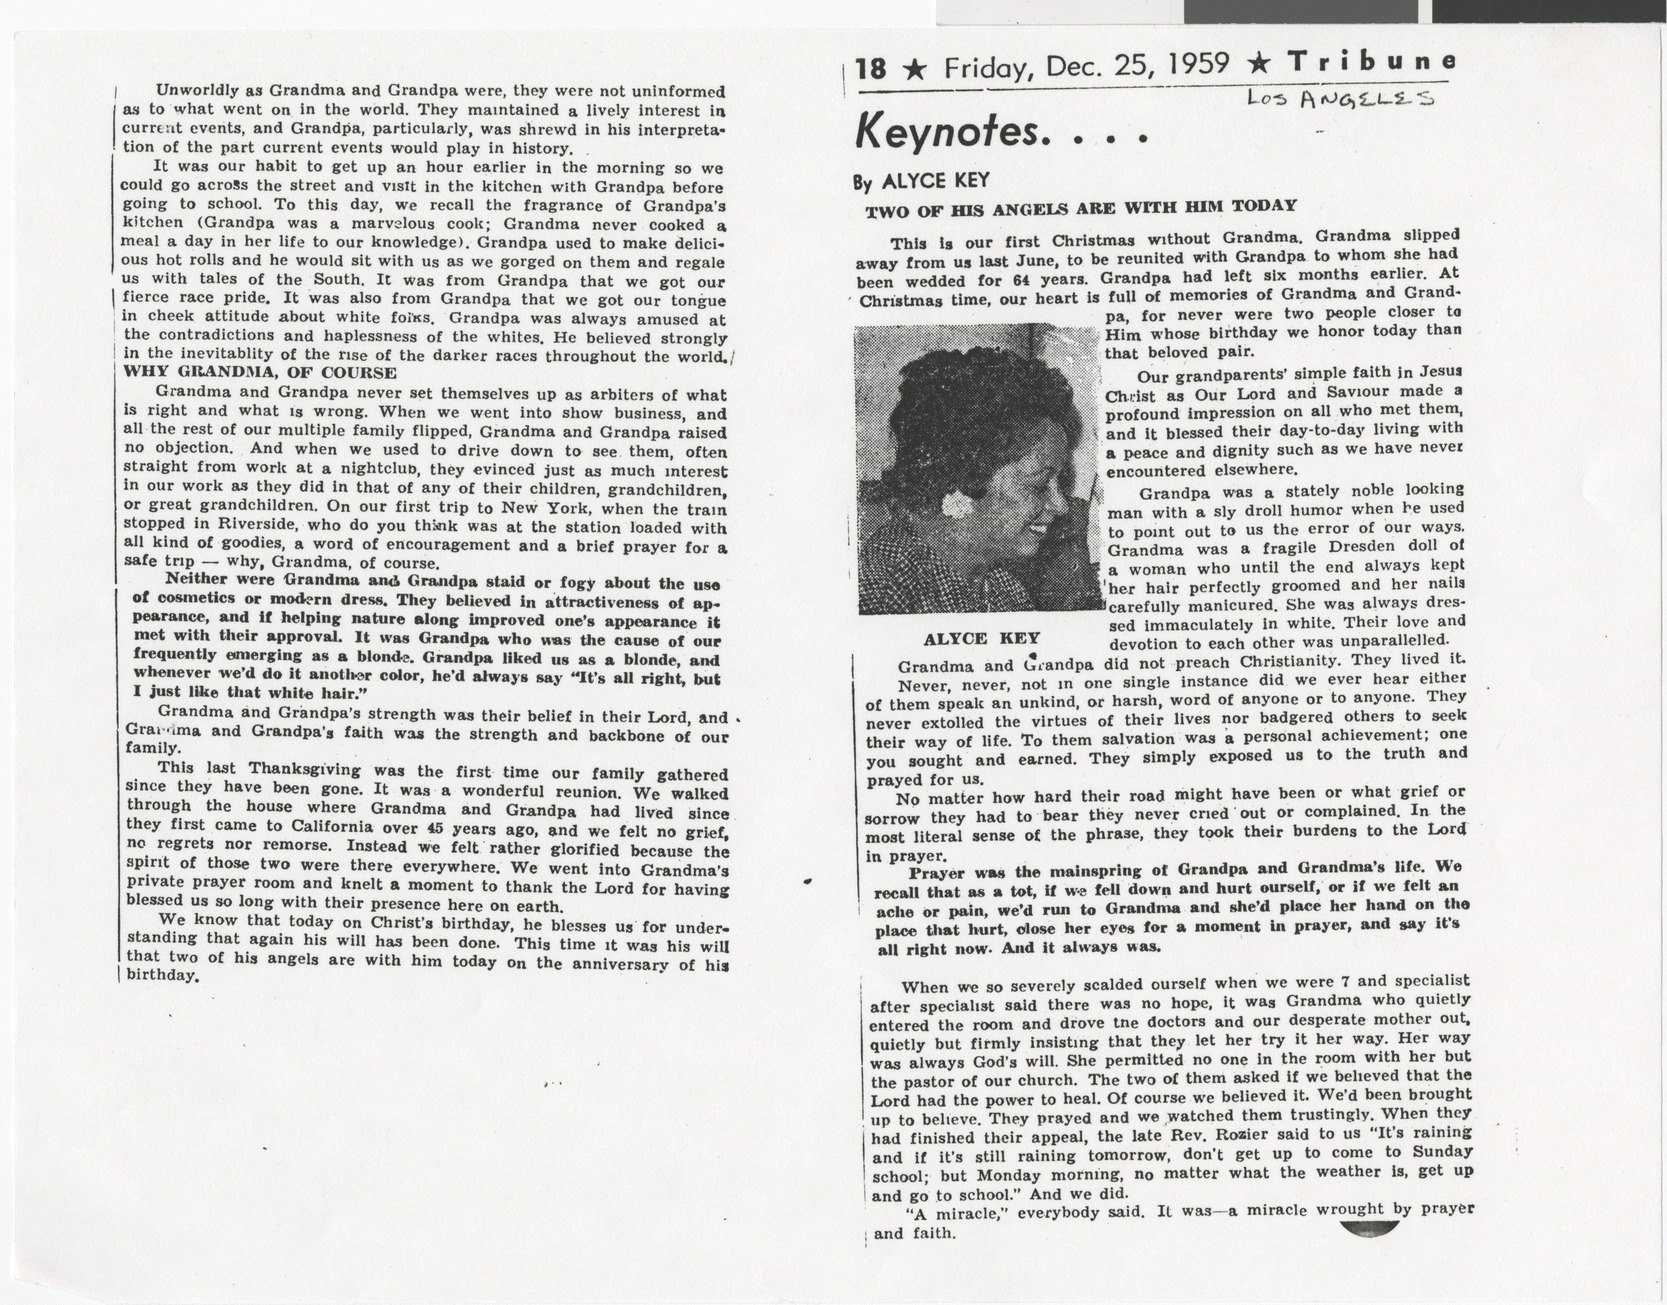 Newspaper clipping (copy), Keynotes by Alyce Key, Los Angeles Tribune, December 25, 1959